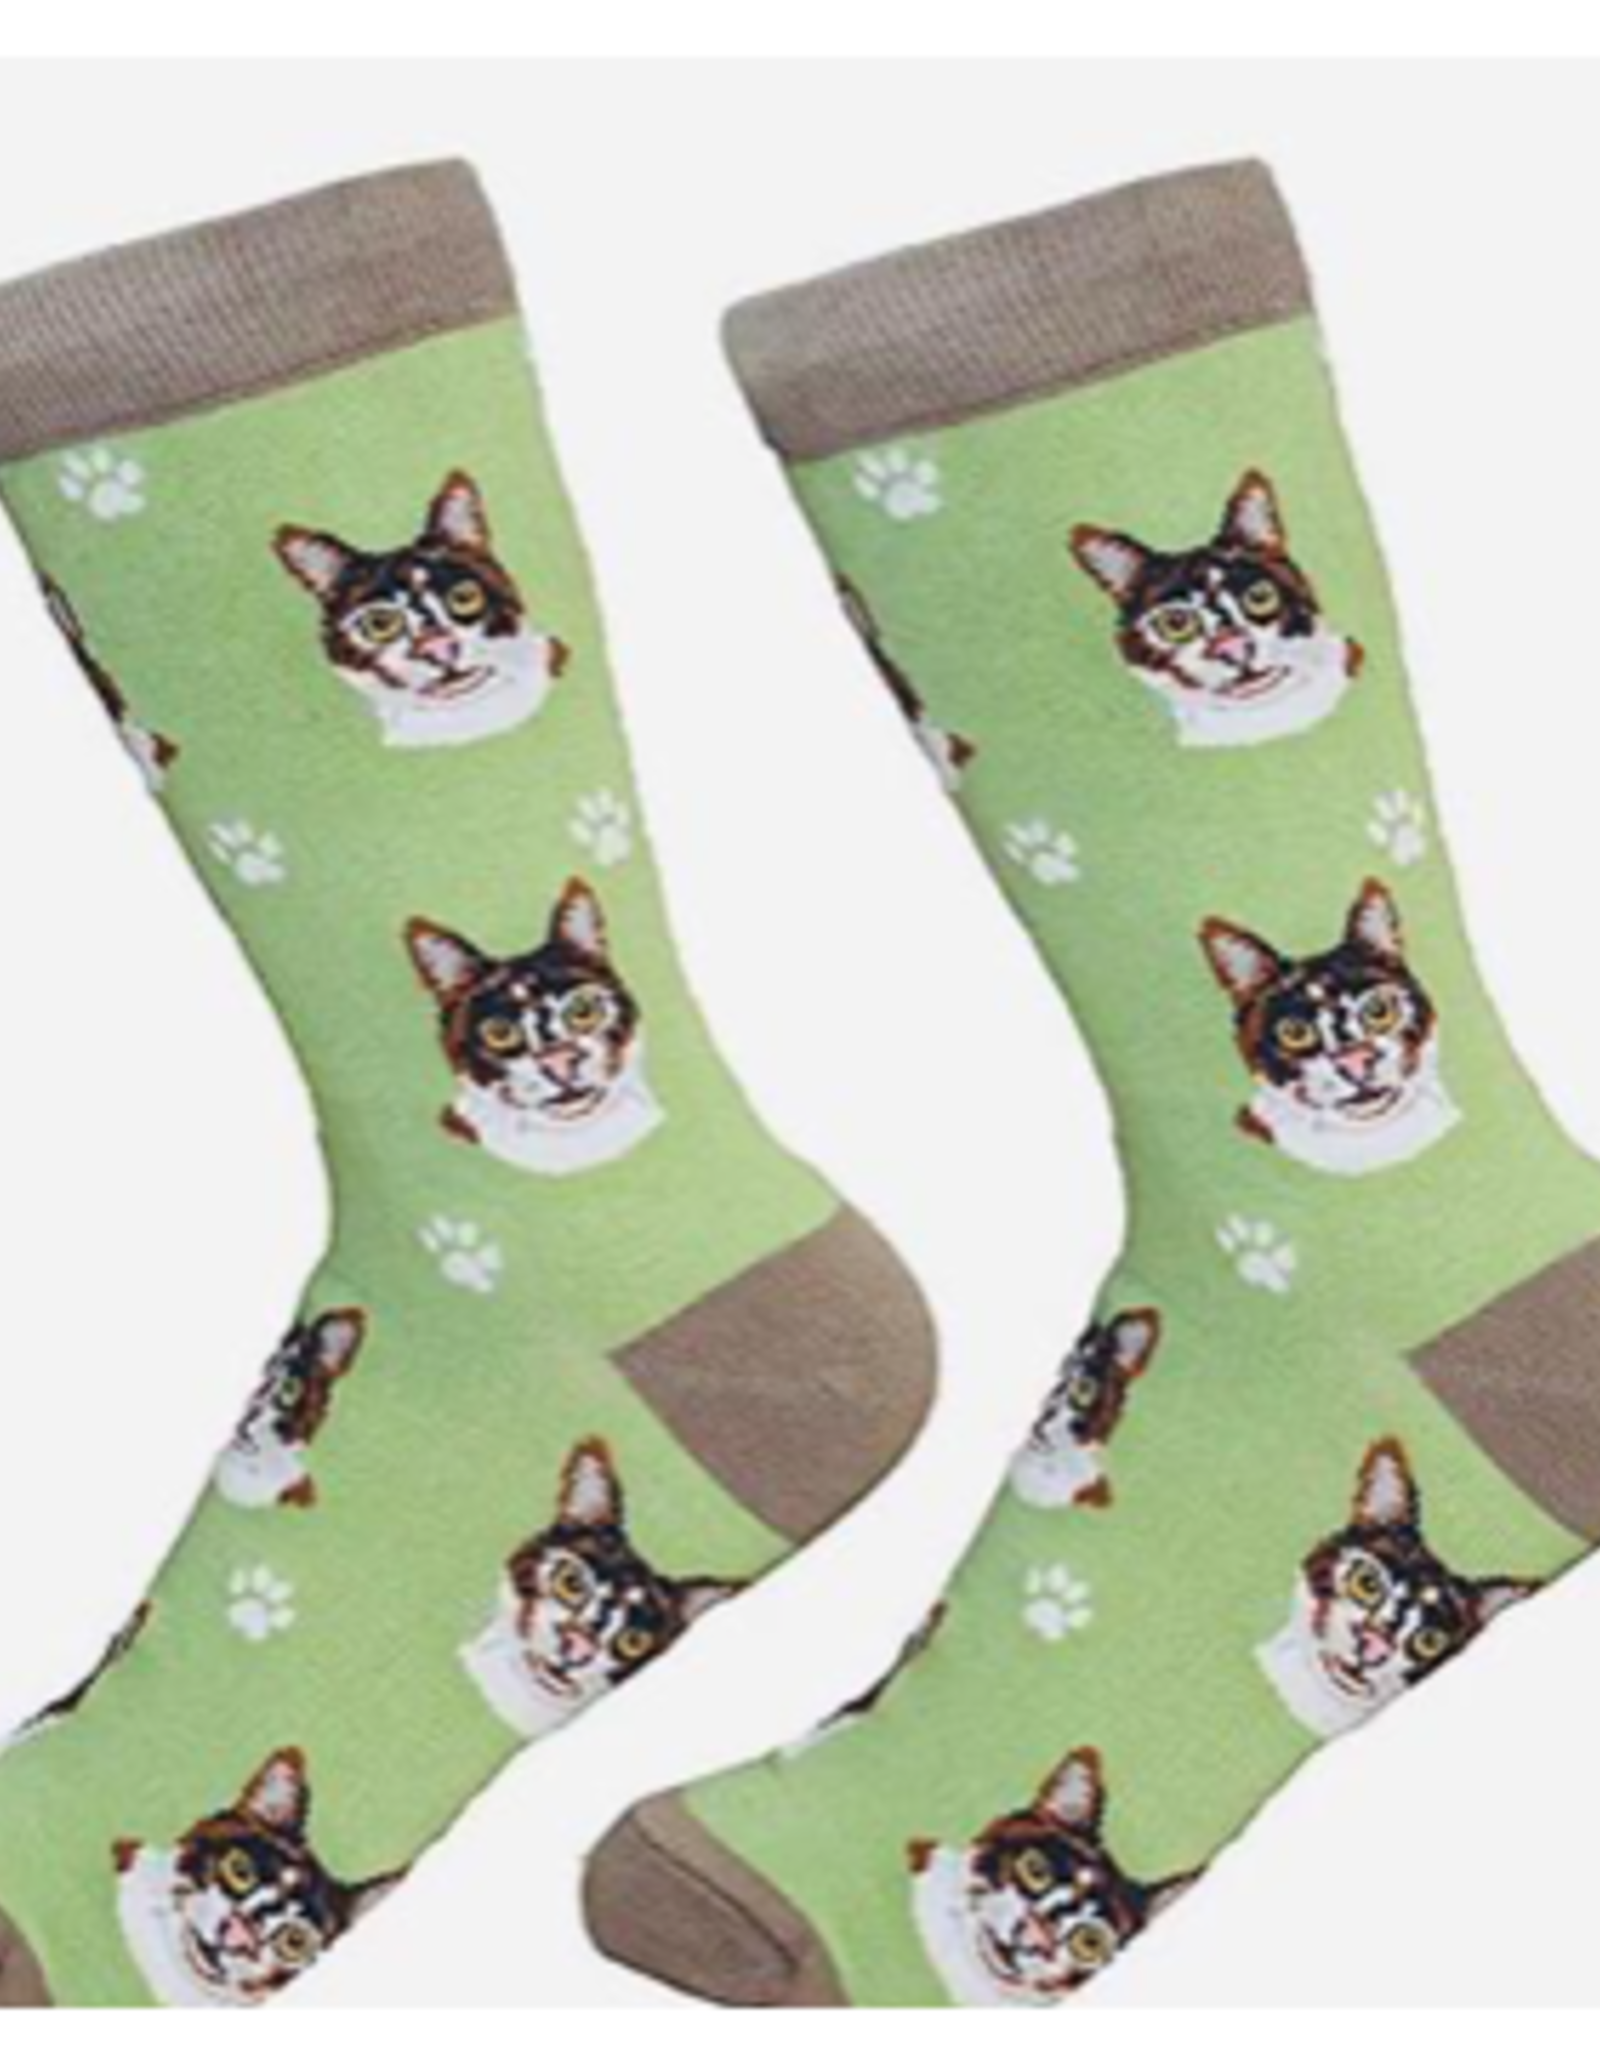 E & S Pets: Calico Cat Socks